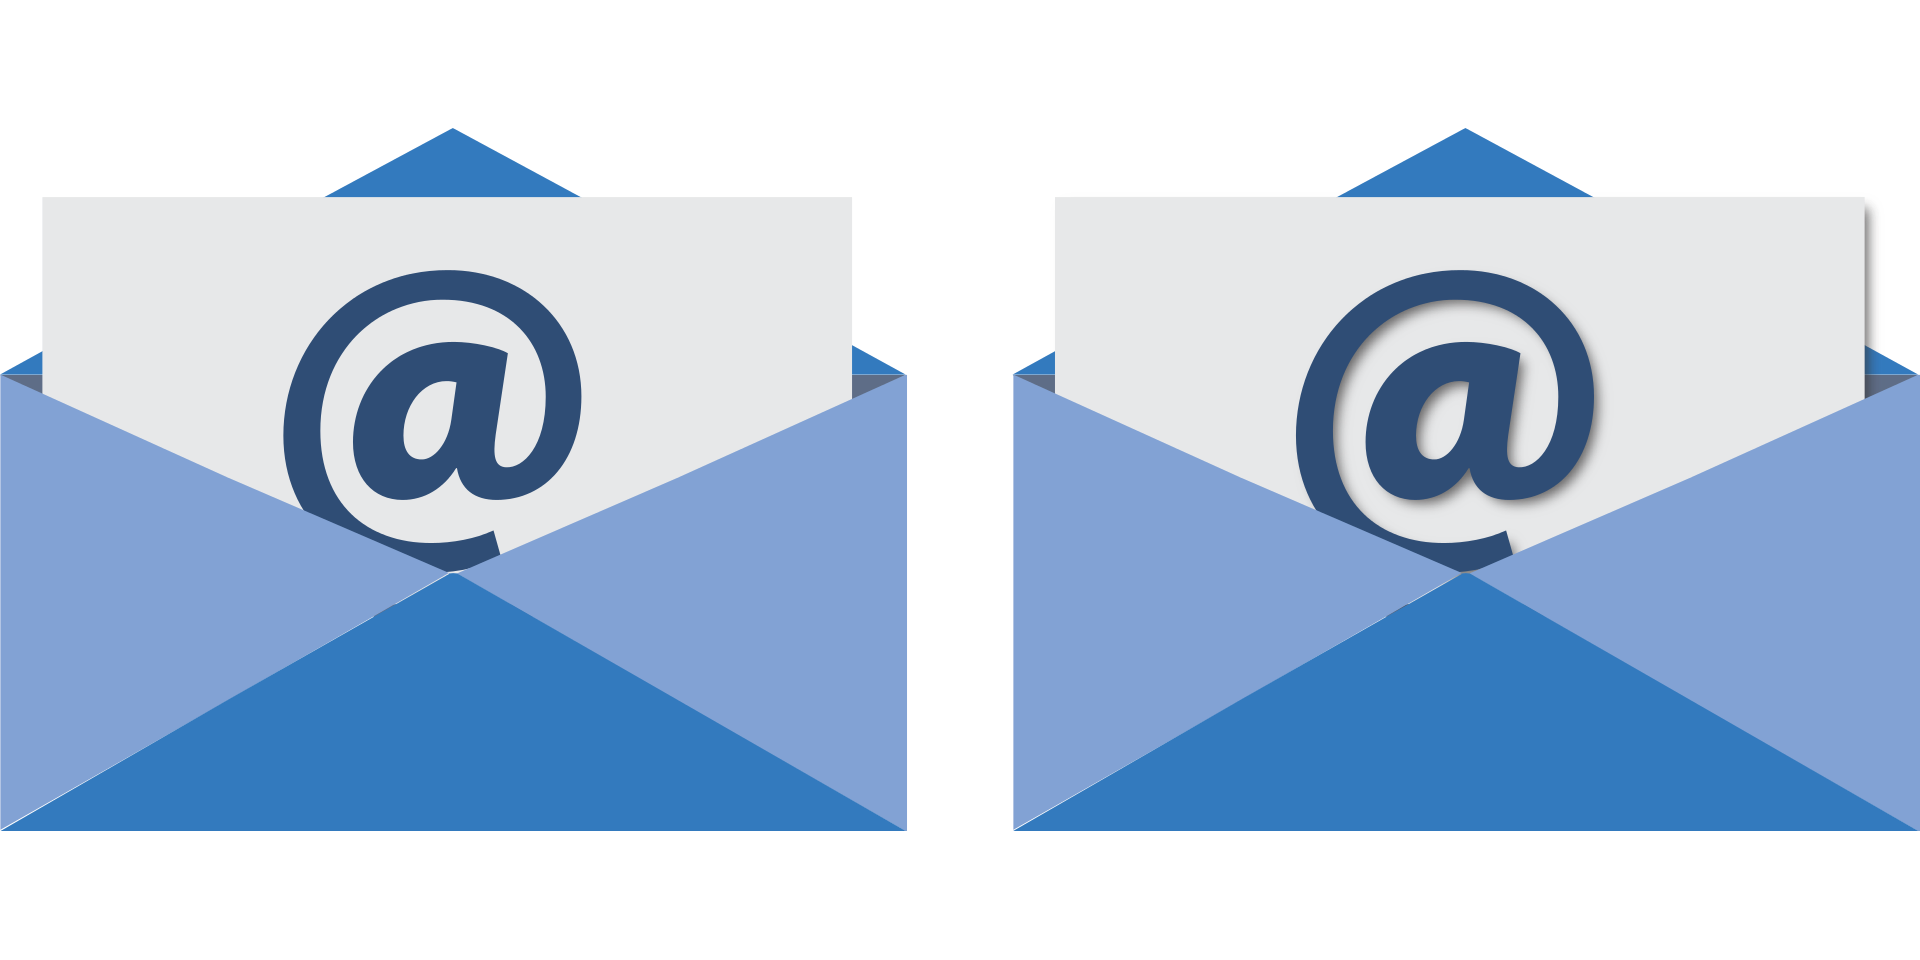 temp mail 2020 إنشاء أيميل خاص بك في دقائق كايرو تايمز